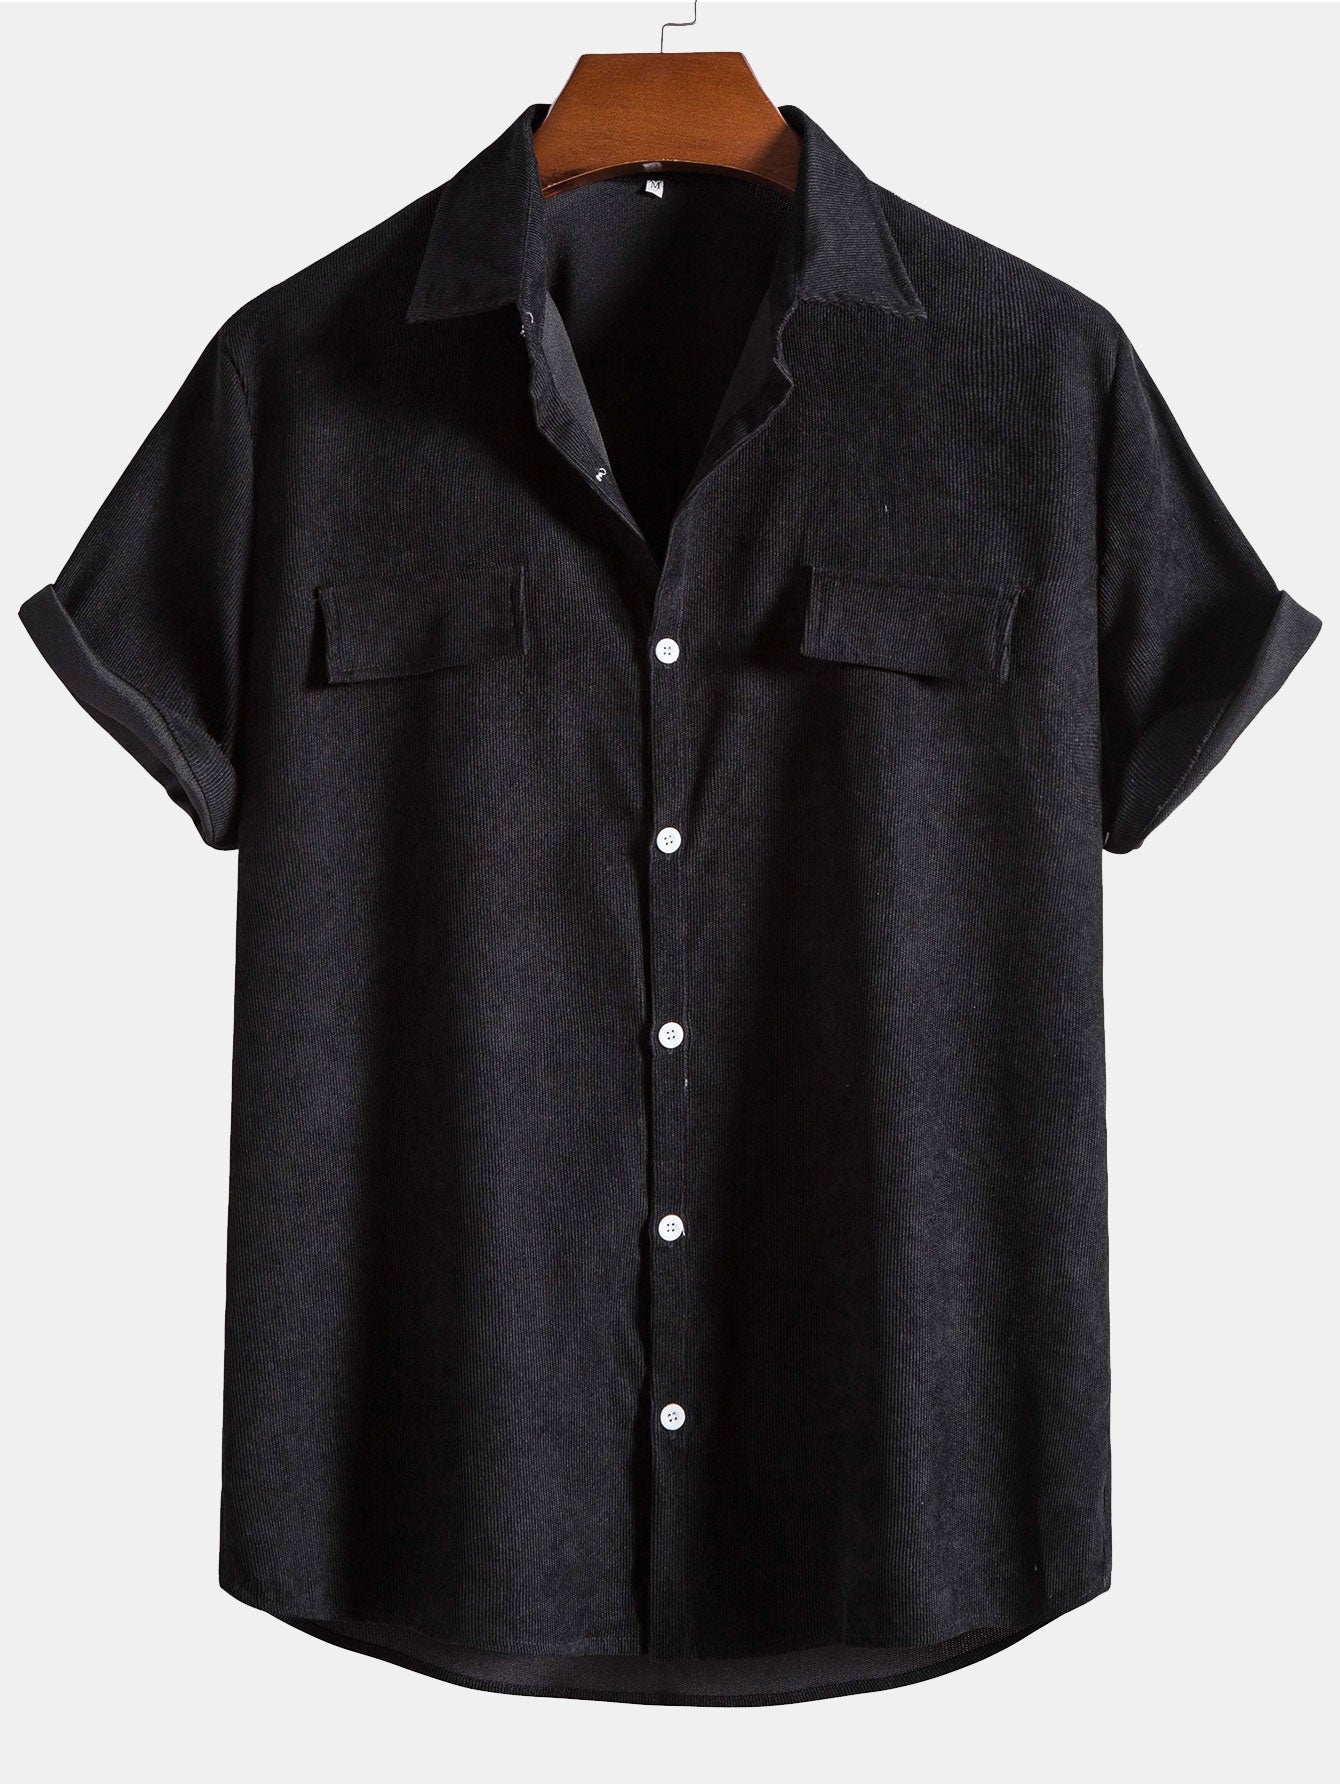 Corduroy Short Sleeve Button Up Shirt